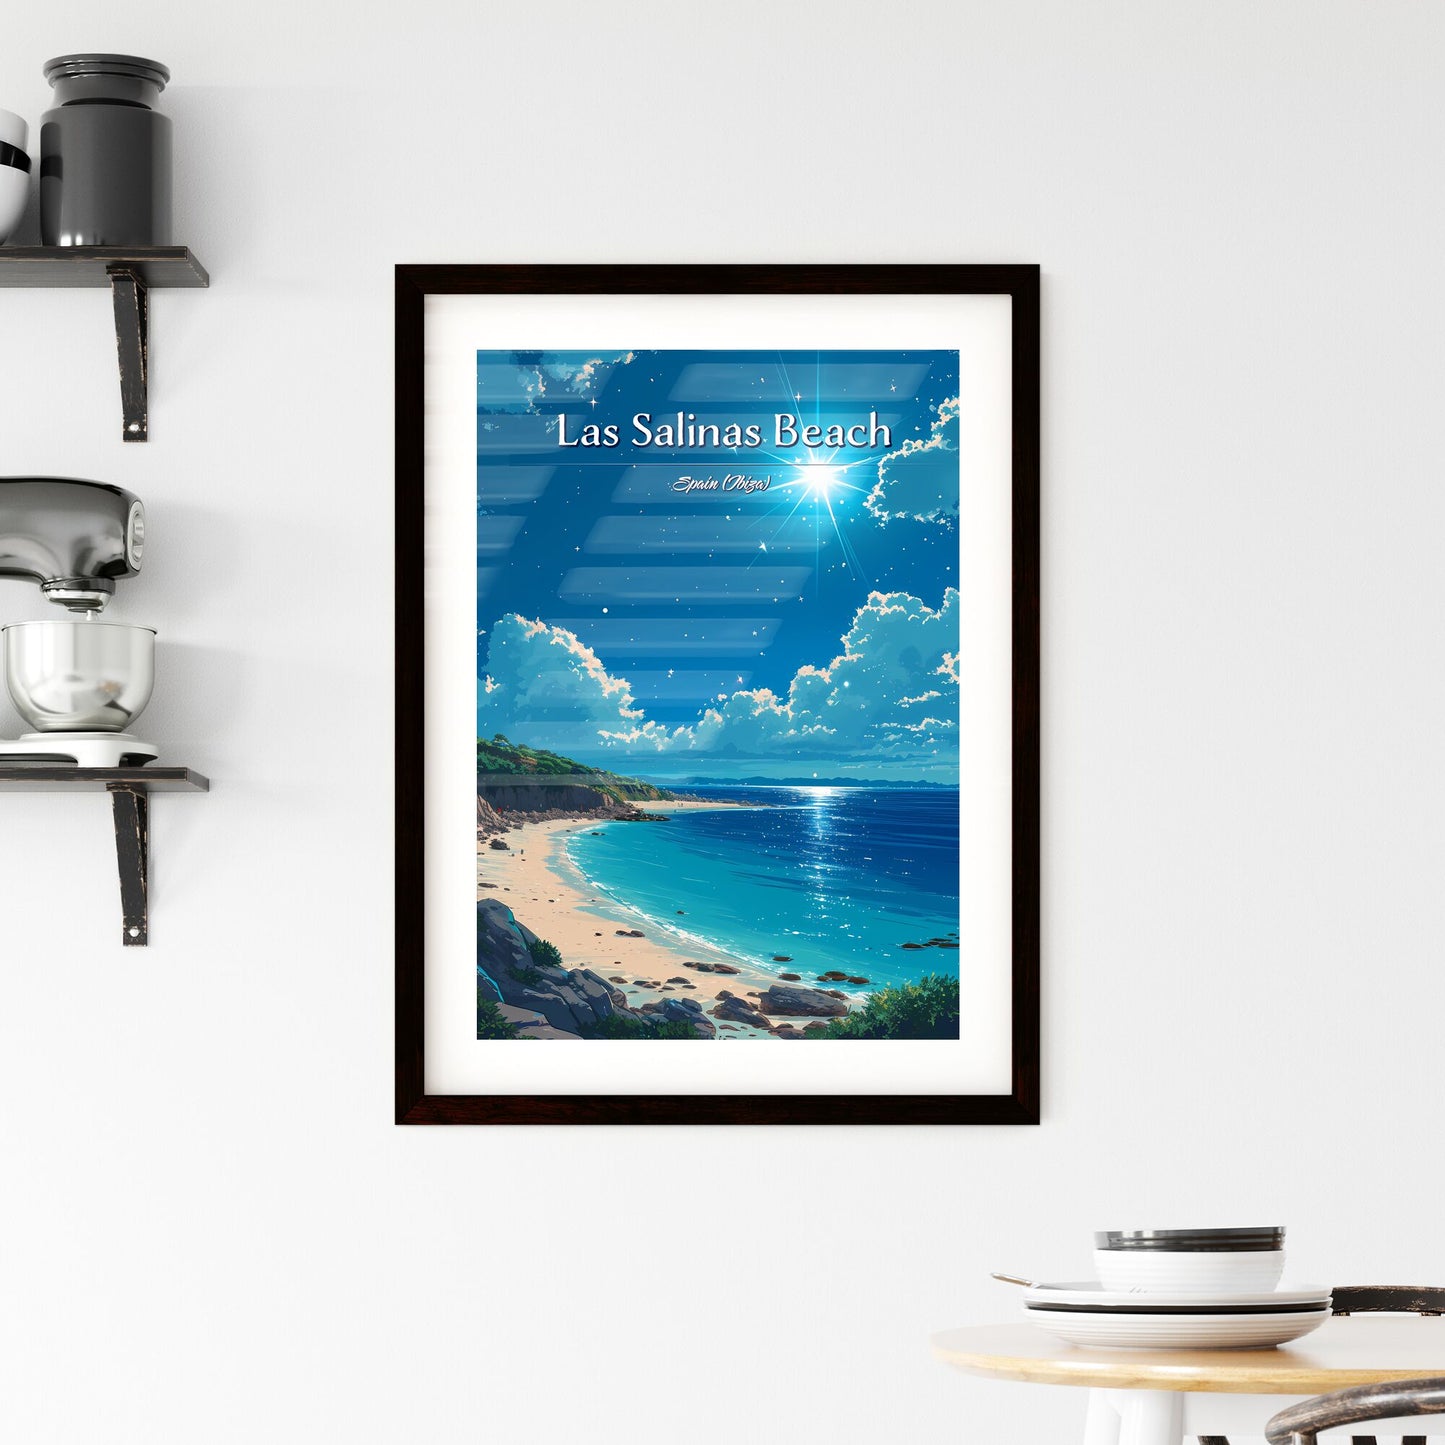 Las Salinas Beach, Spain (Ibiza) - Art print of a beach with rocks and a sandy beach with a blue sky and clouds Default Title